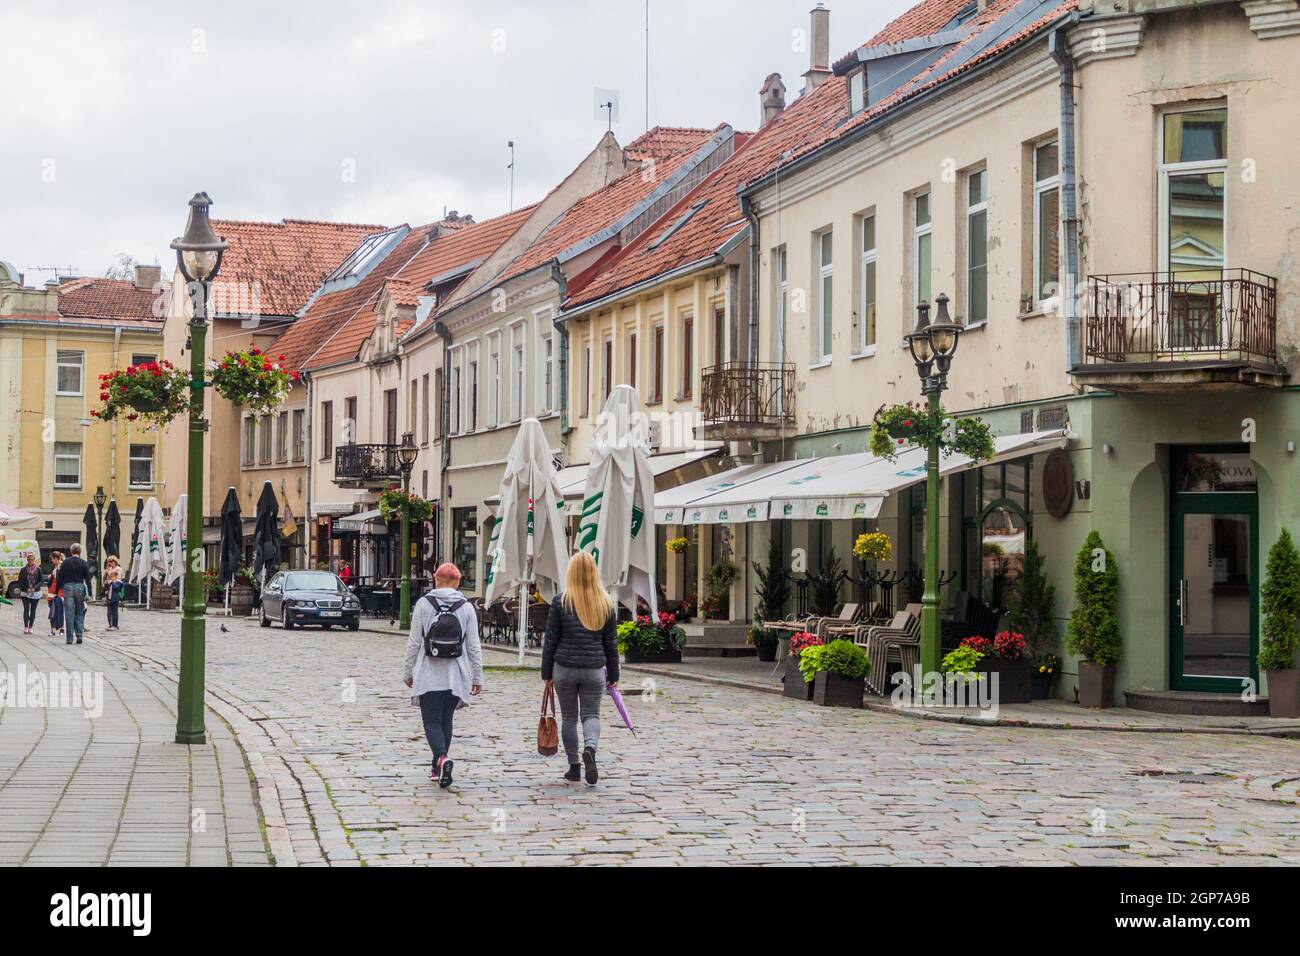 KAUNAS, LITHUANIA - AUGUST 17, 2016: People walk along Vilniaus gatve street in Kaunas, Lithuania Stock Photo